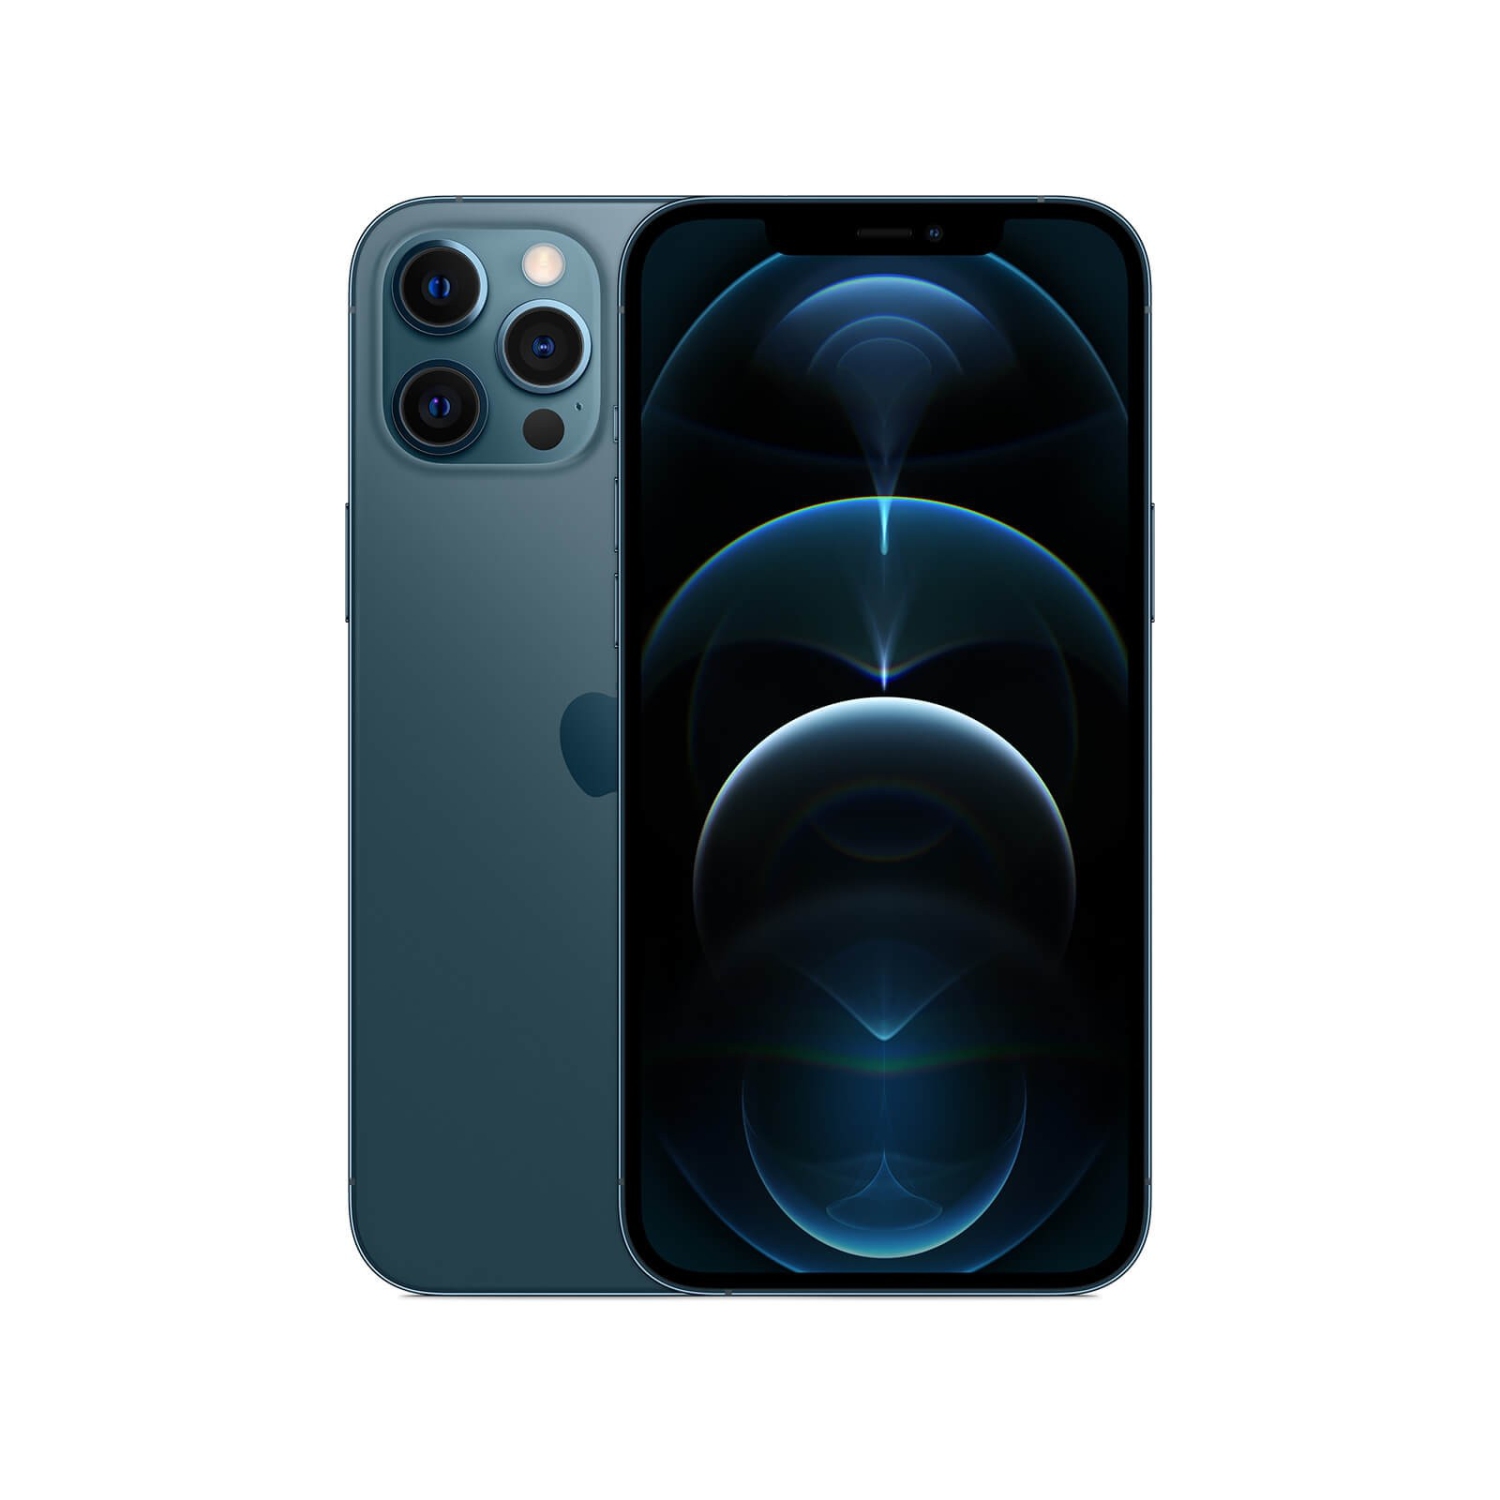 Apple Iphone 12 Pro Max 128GB Smartphone Pacific Blue Unlocked Open Box